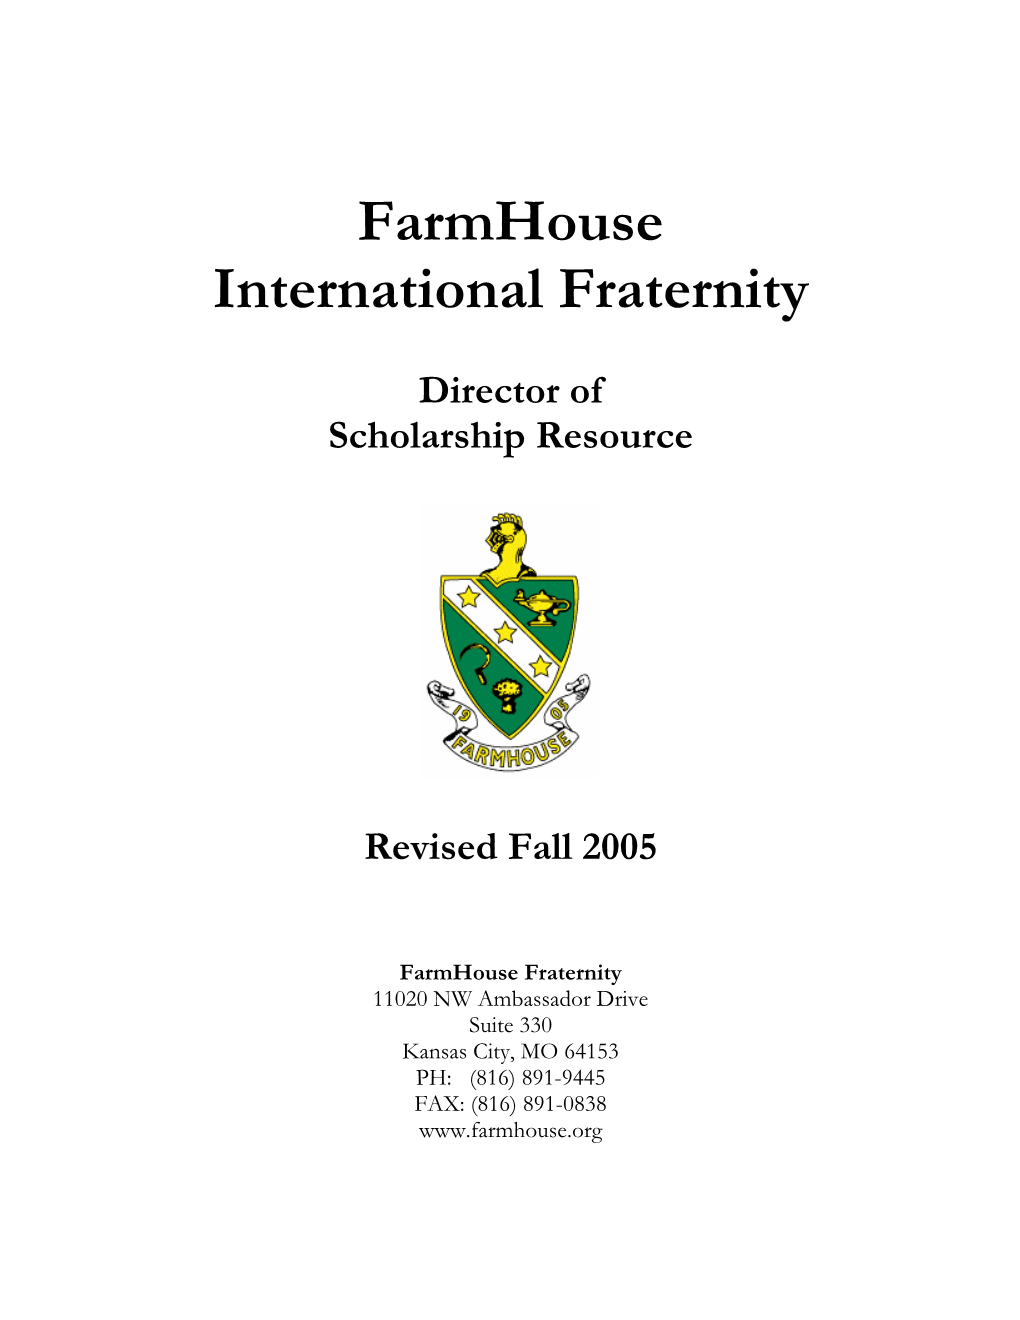 Farmhouse International Fraternity Director of Scholarship Resource